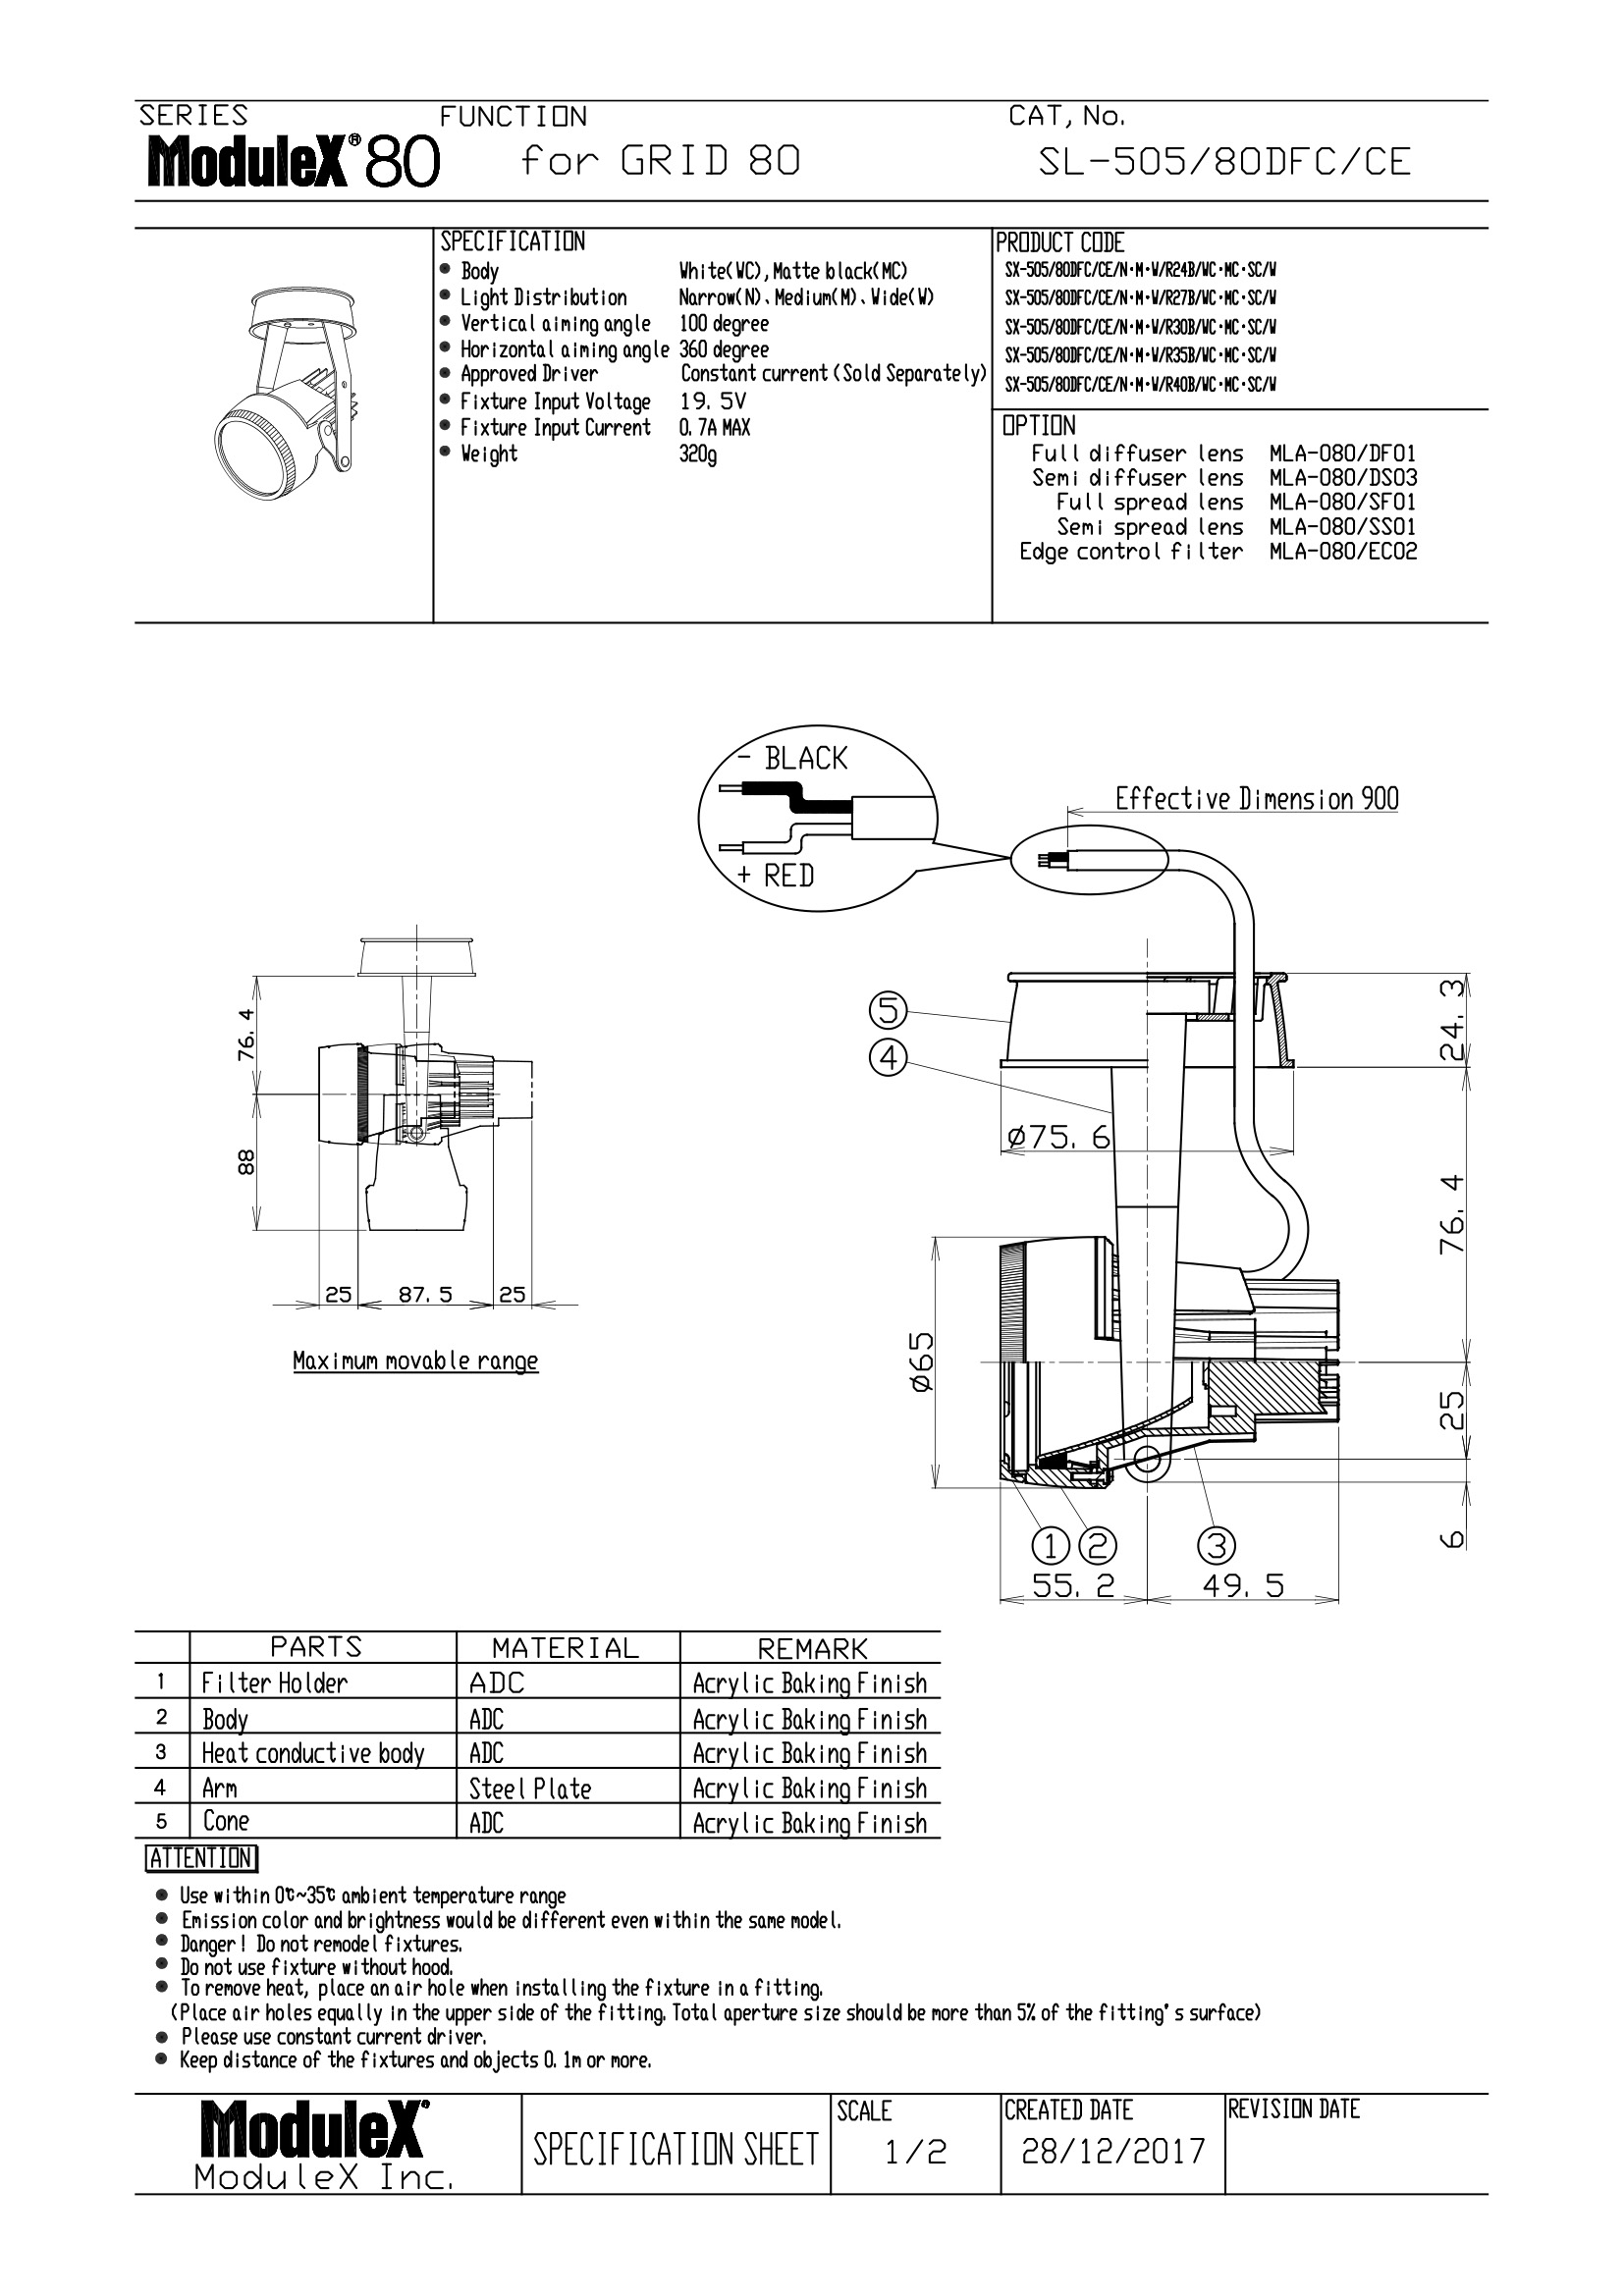 SL-505/80DFC Specification Sheet